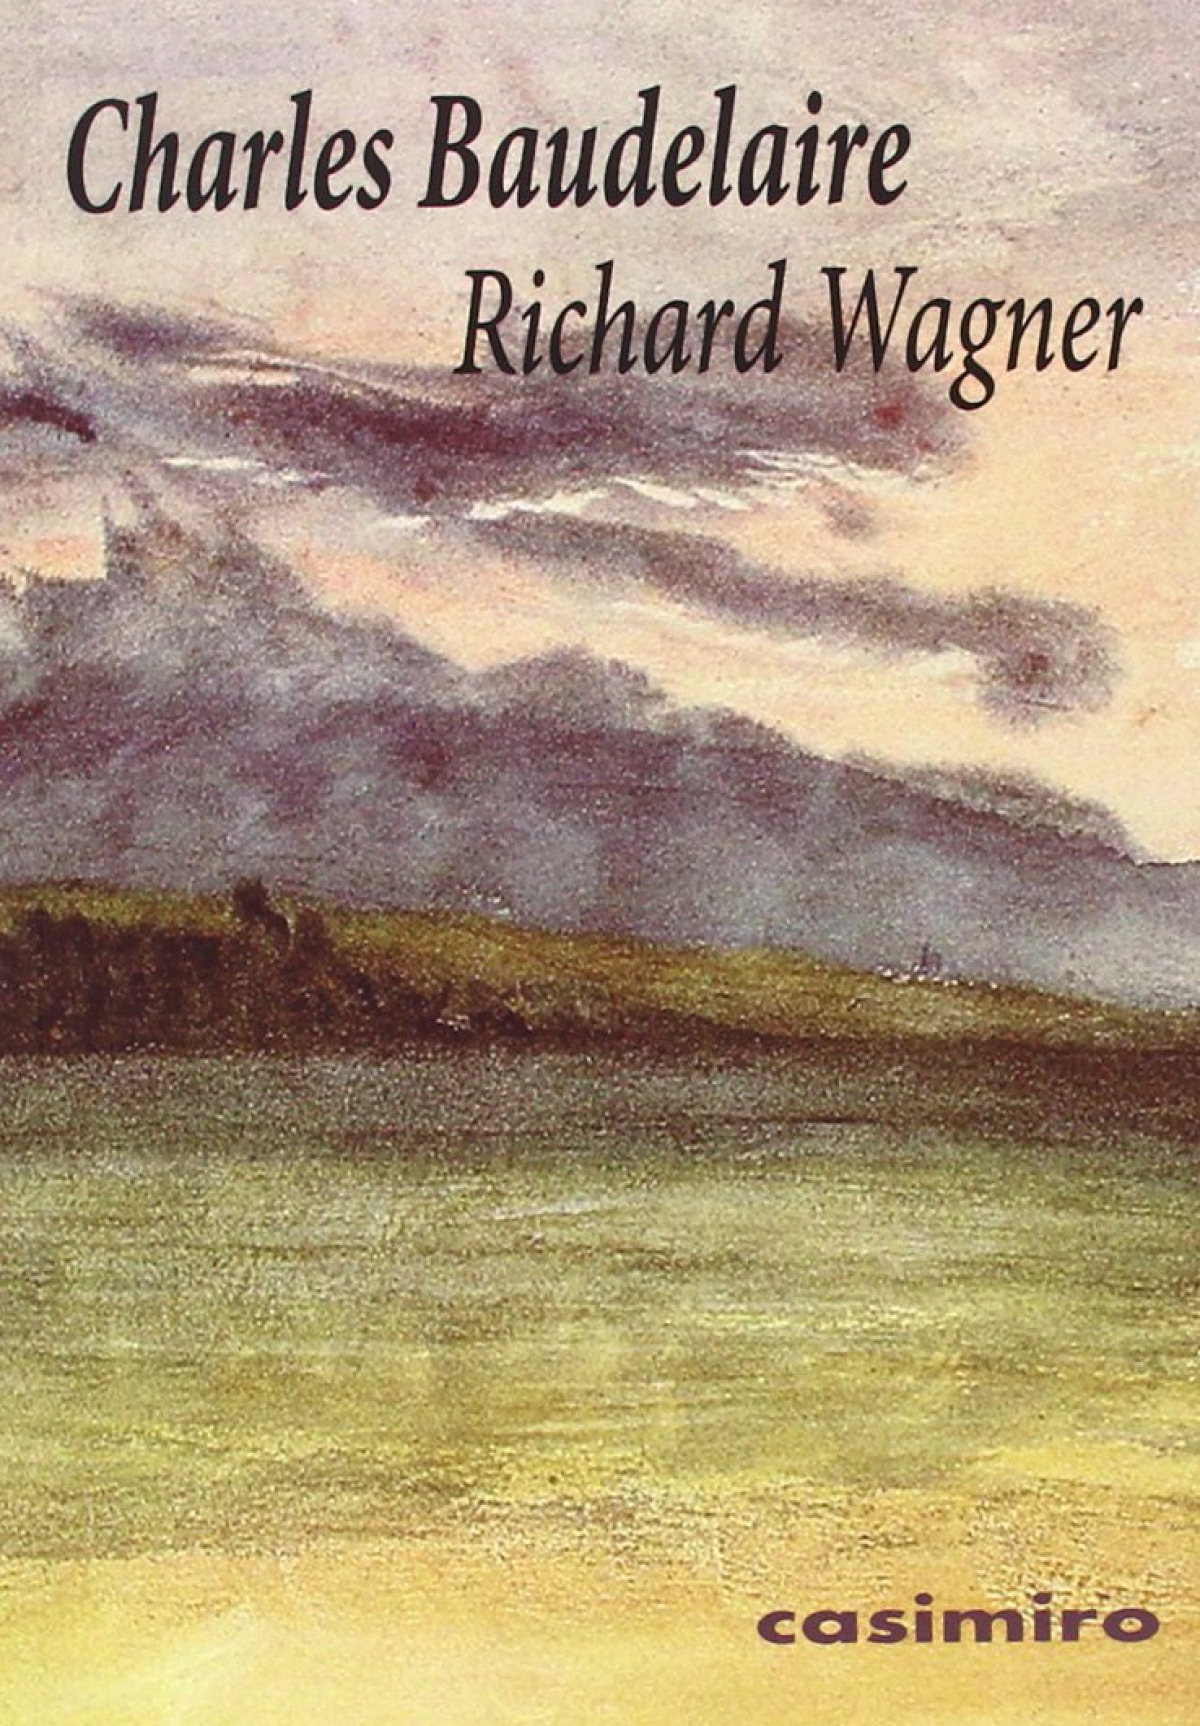 Richard Wagner - Baudelaire Charles